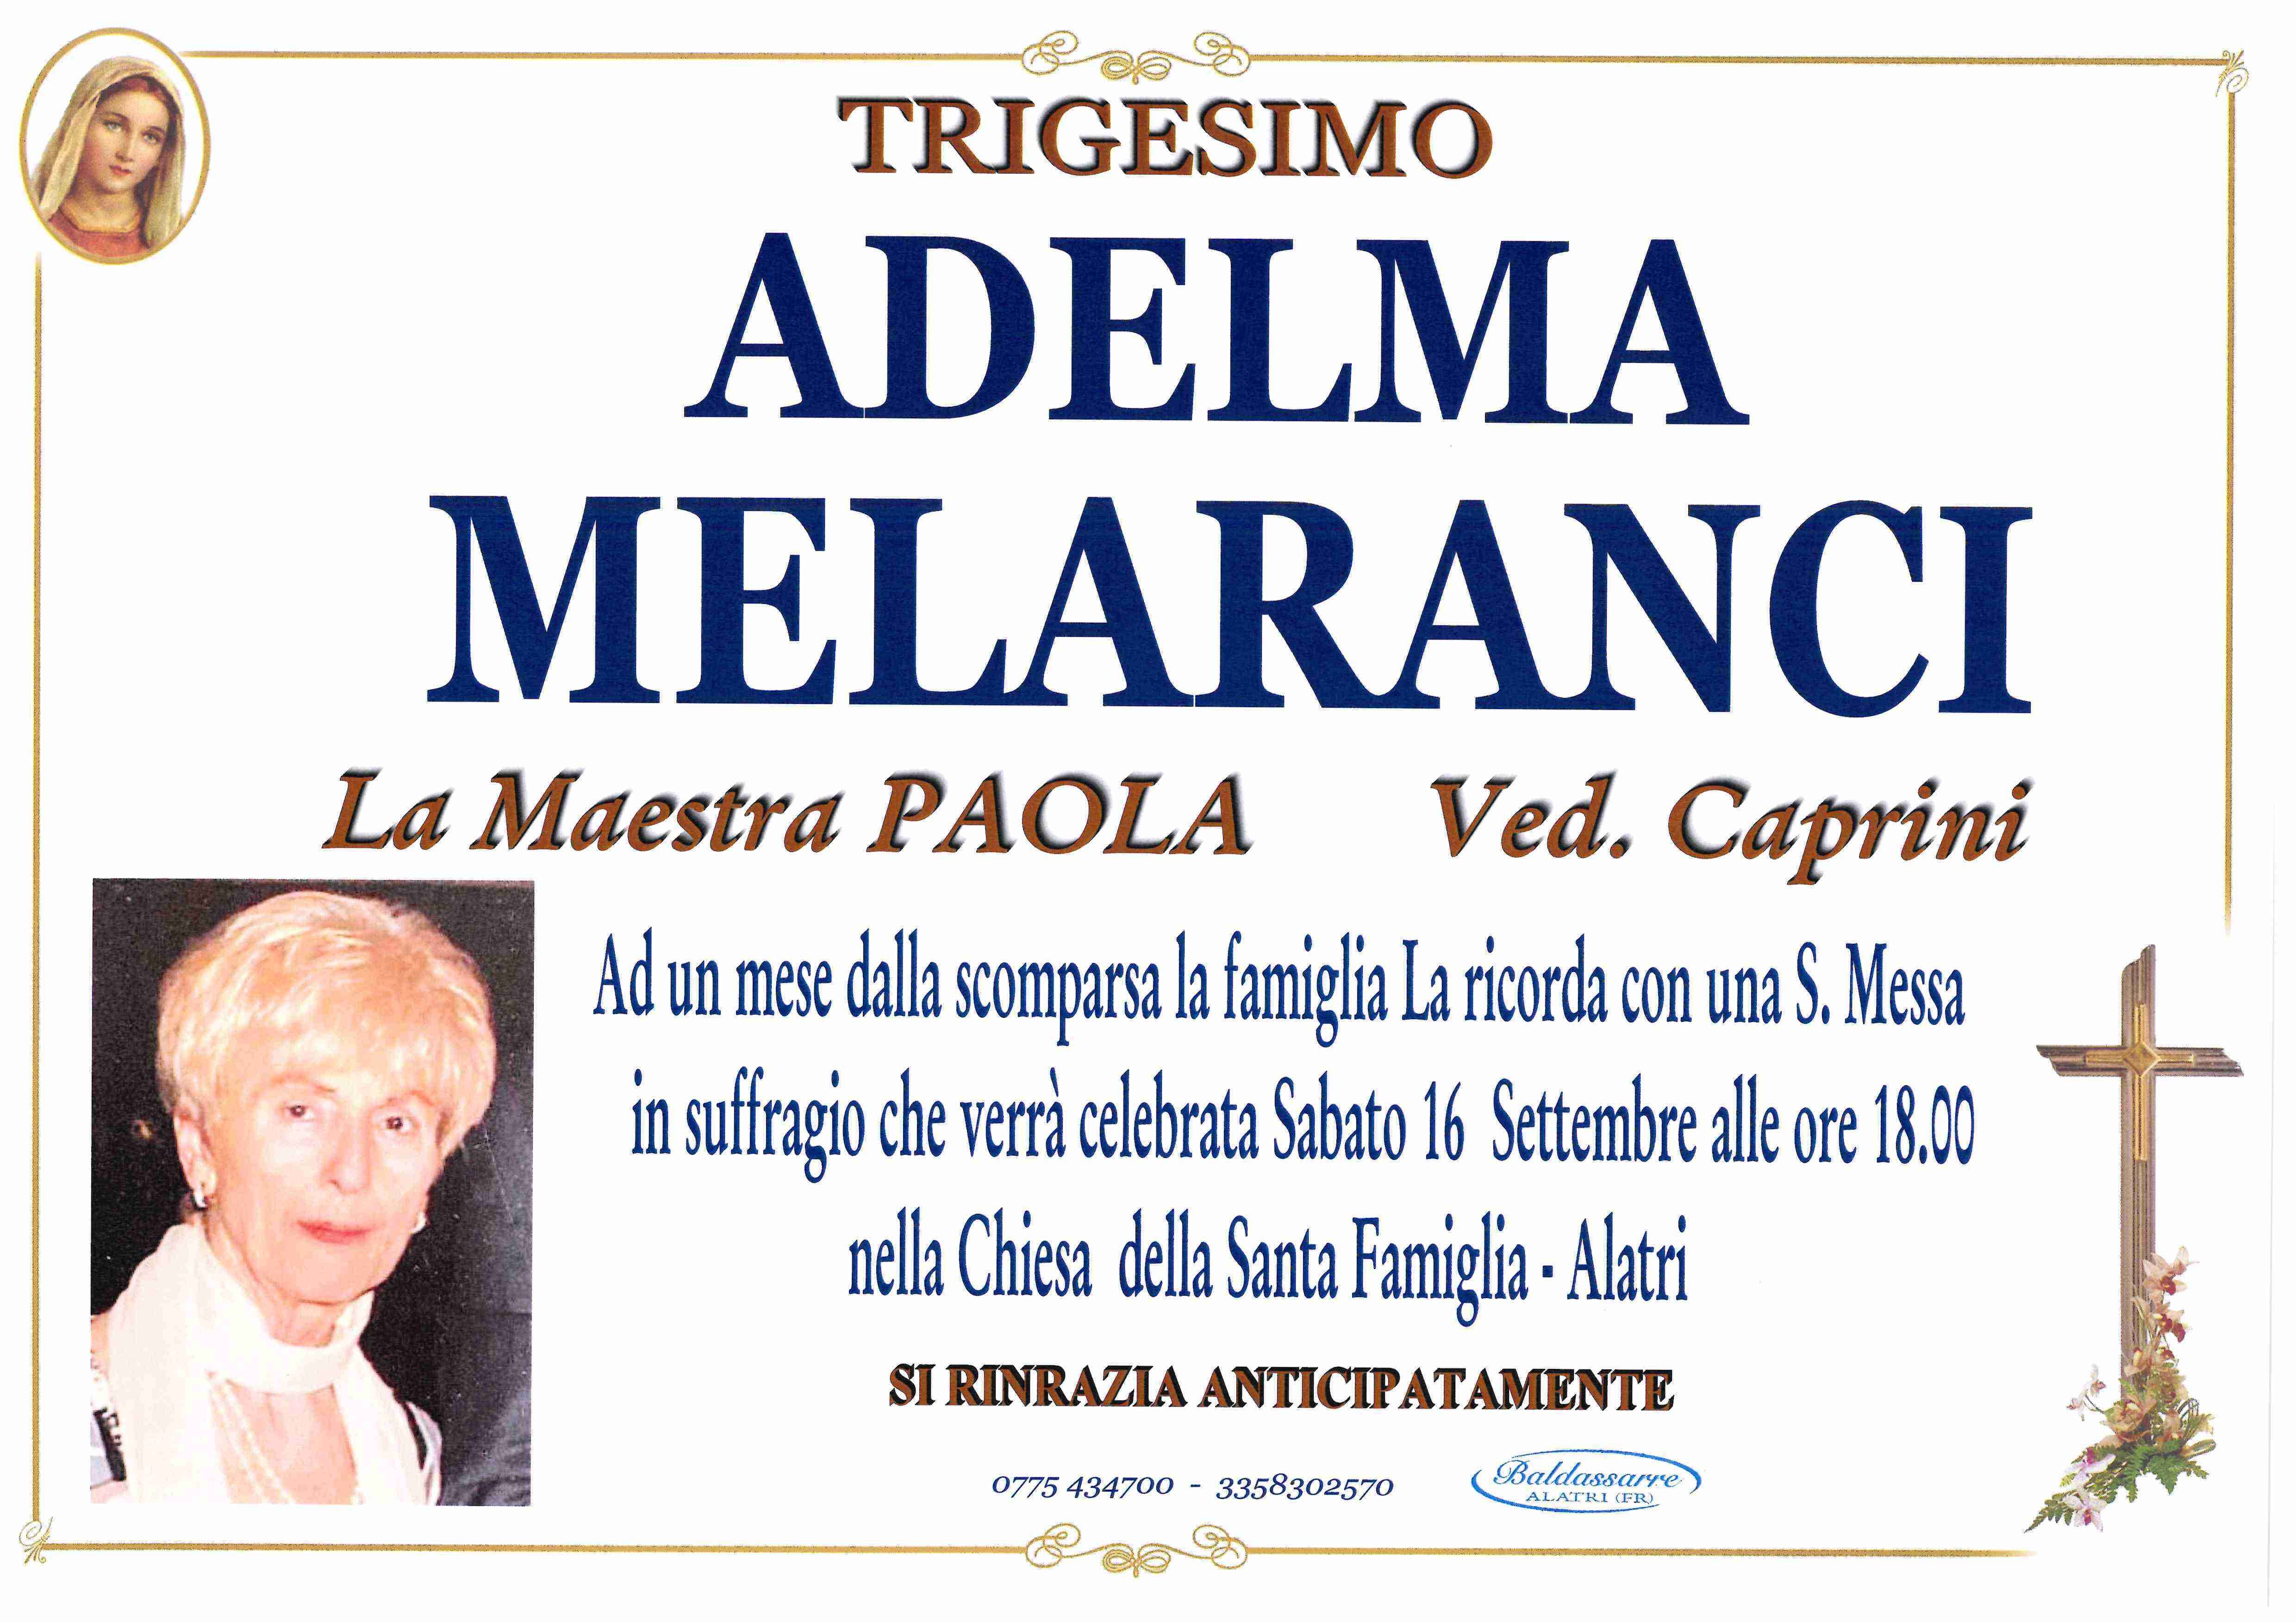 Adelma Melaranci